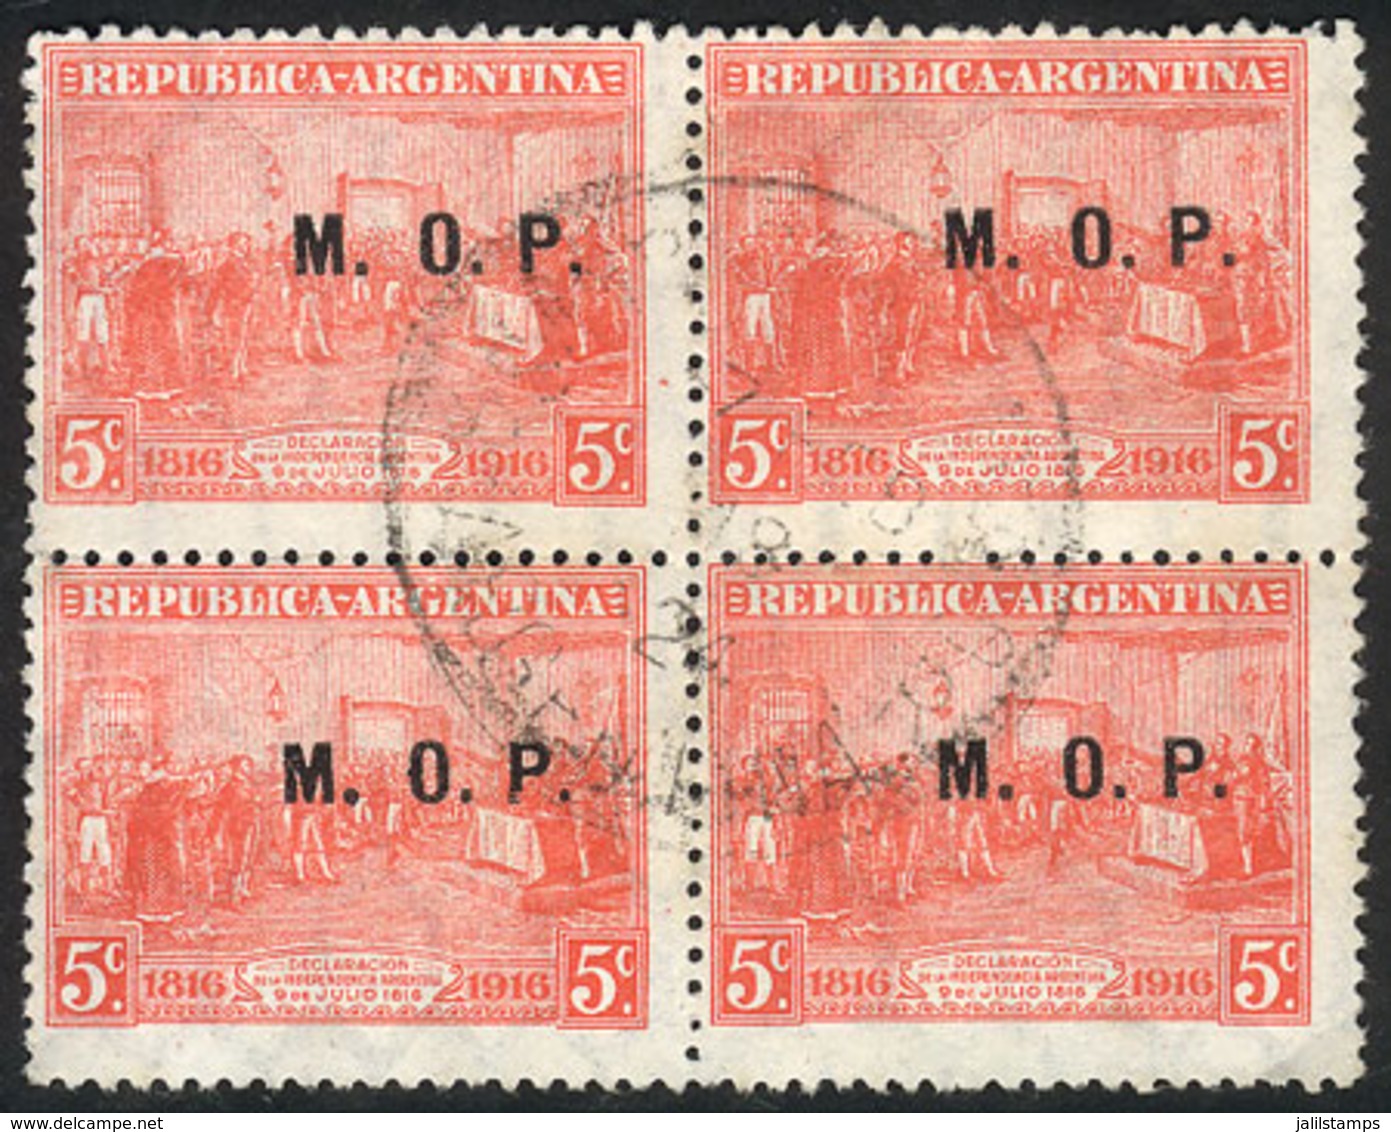 ARGENTINA: GJ.525, 1916 5c. Centenary With M.O.P. Overprint, Rare Used Block Of 4, VF Quality! - Oficiales